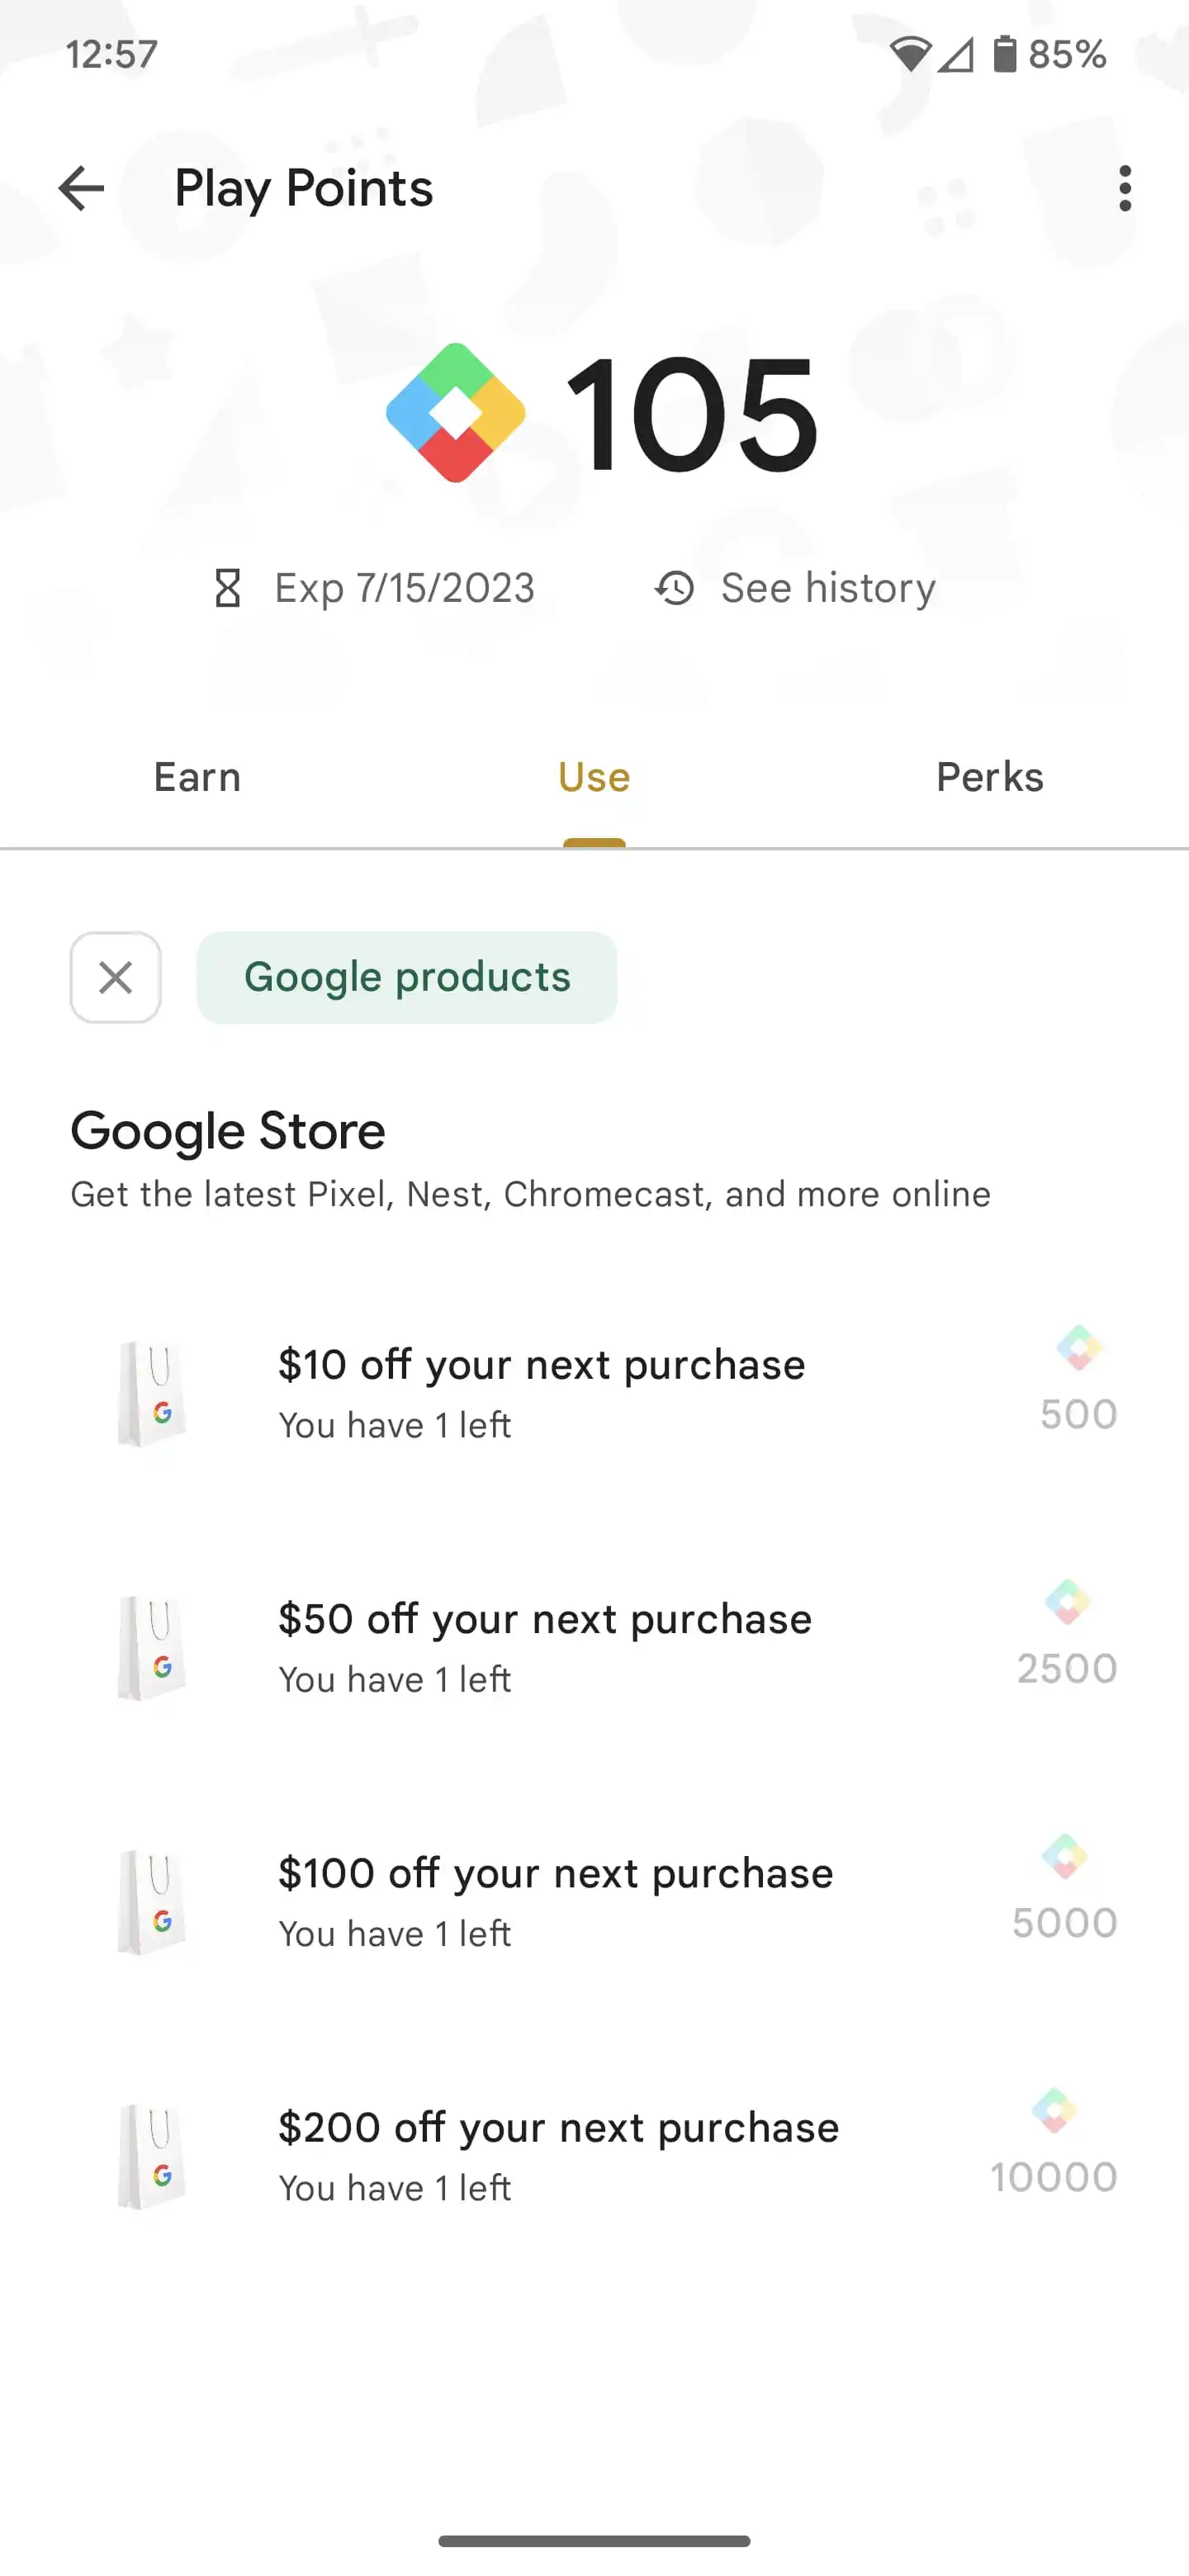 Play points Google Store screenshots (3)